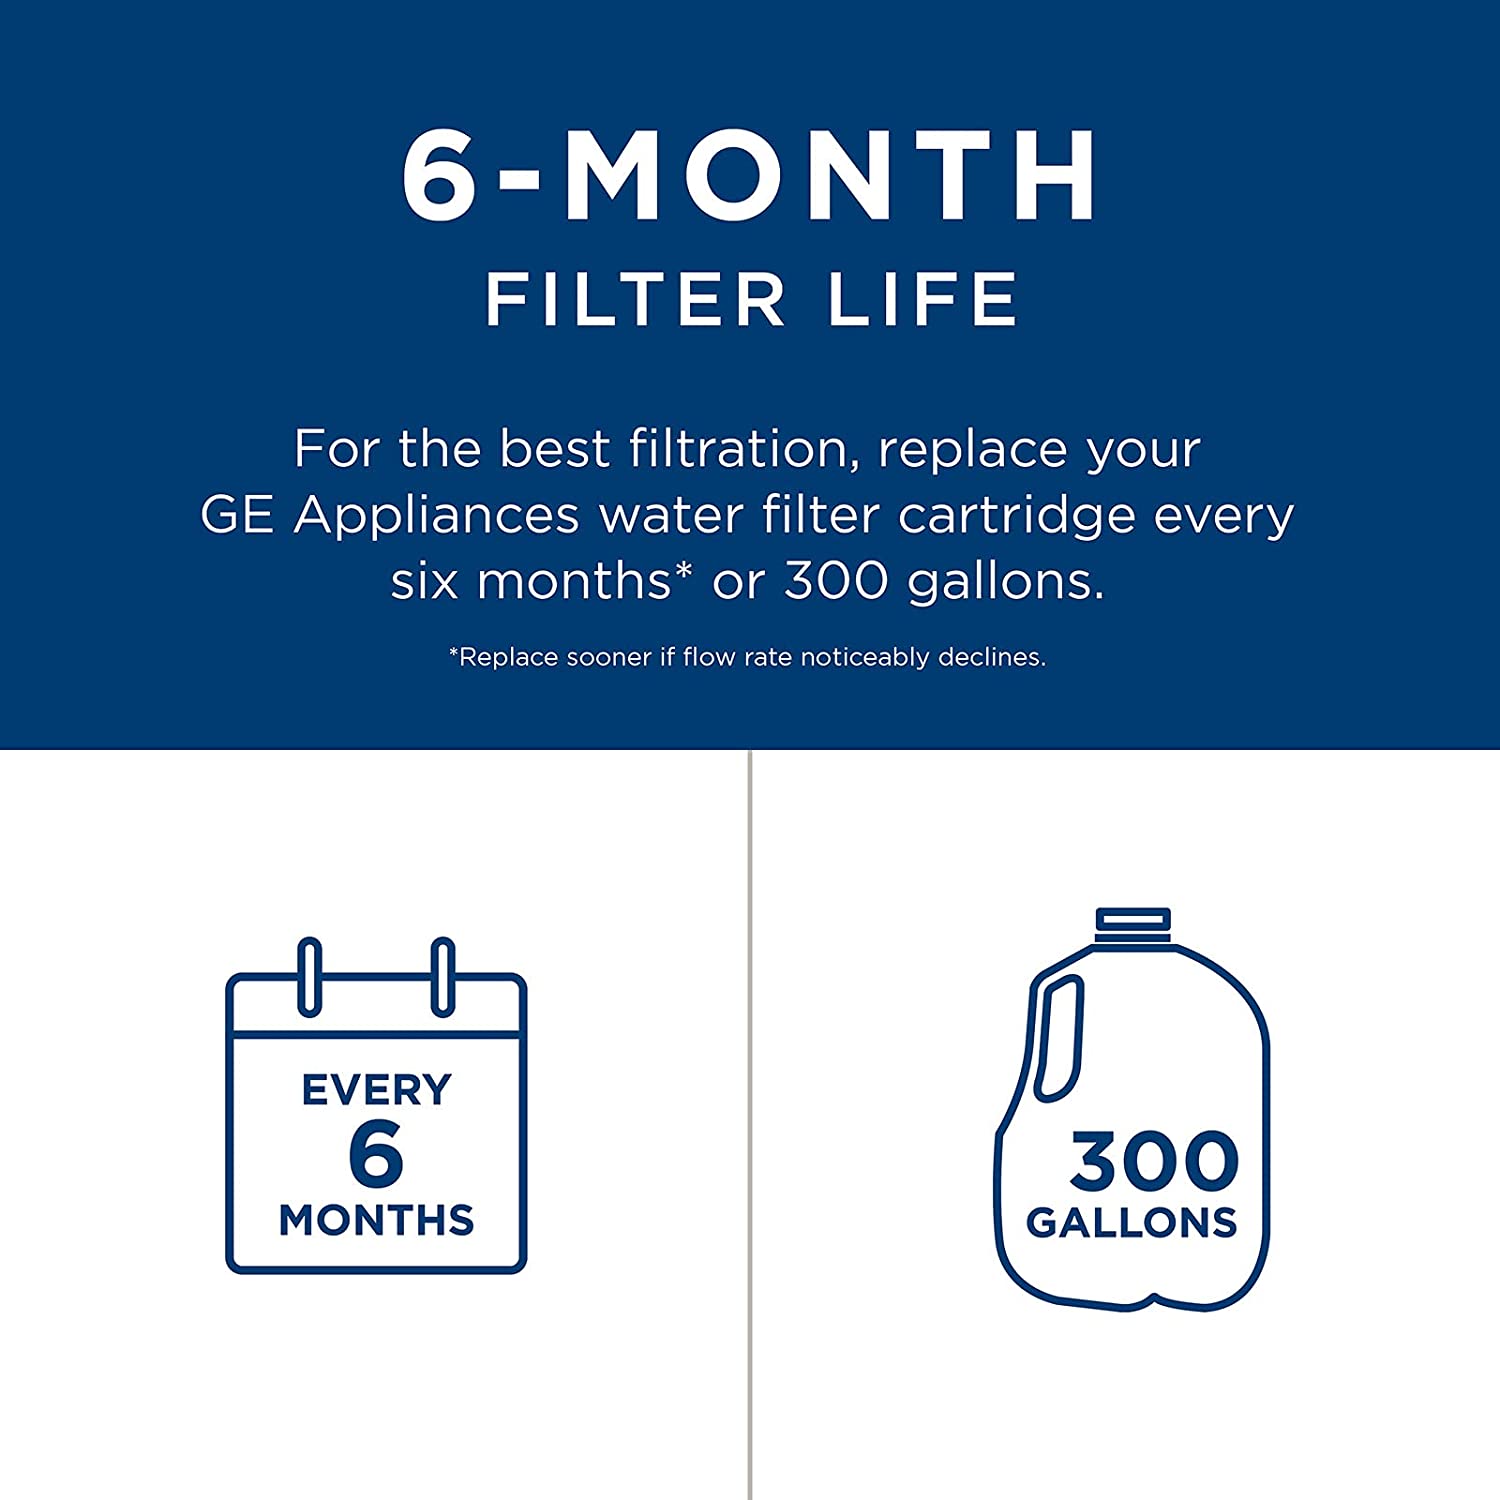 GE Appliances  MWF Refrigerator Water Filter